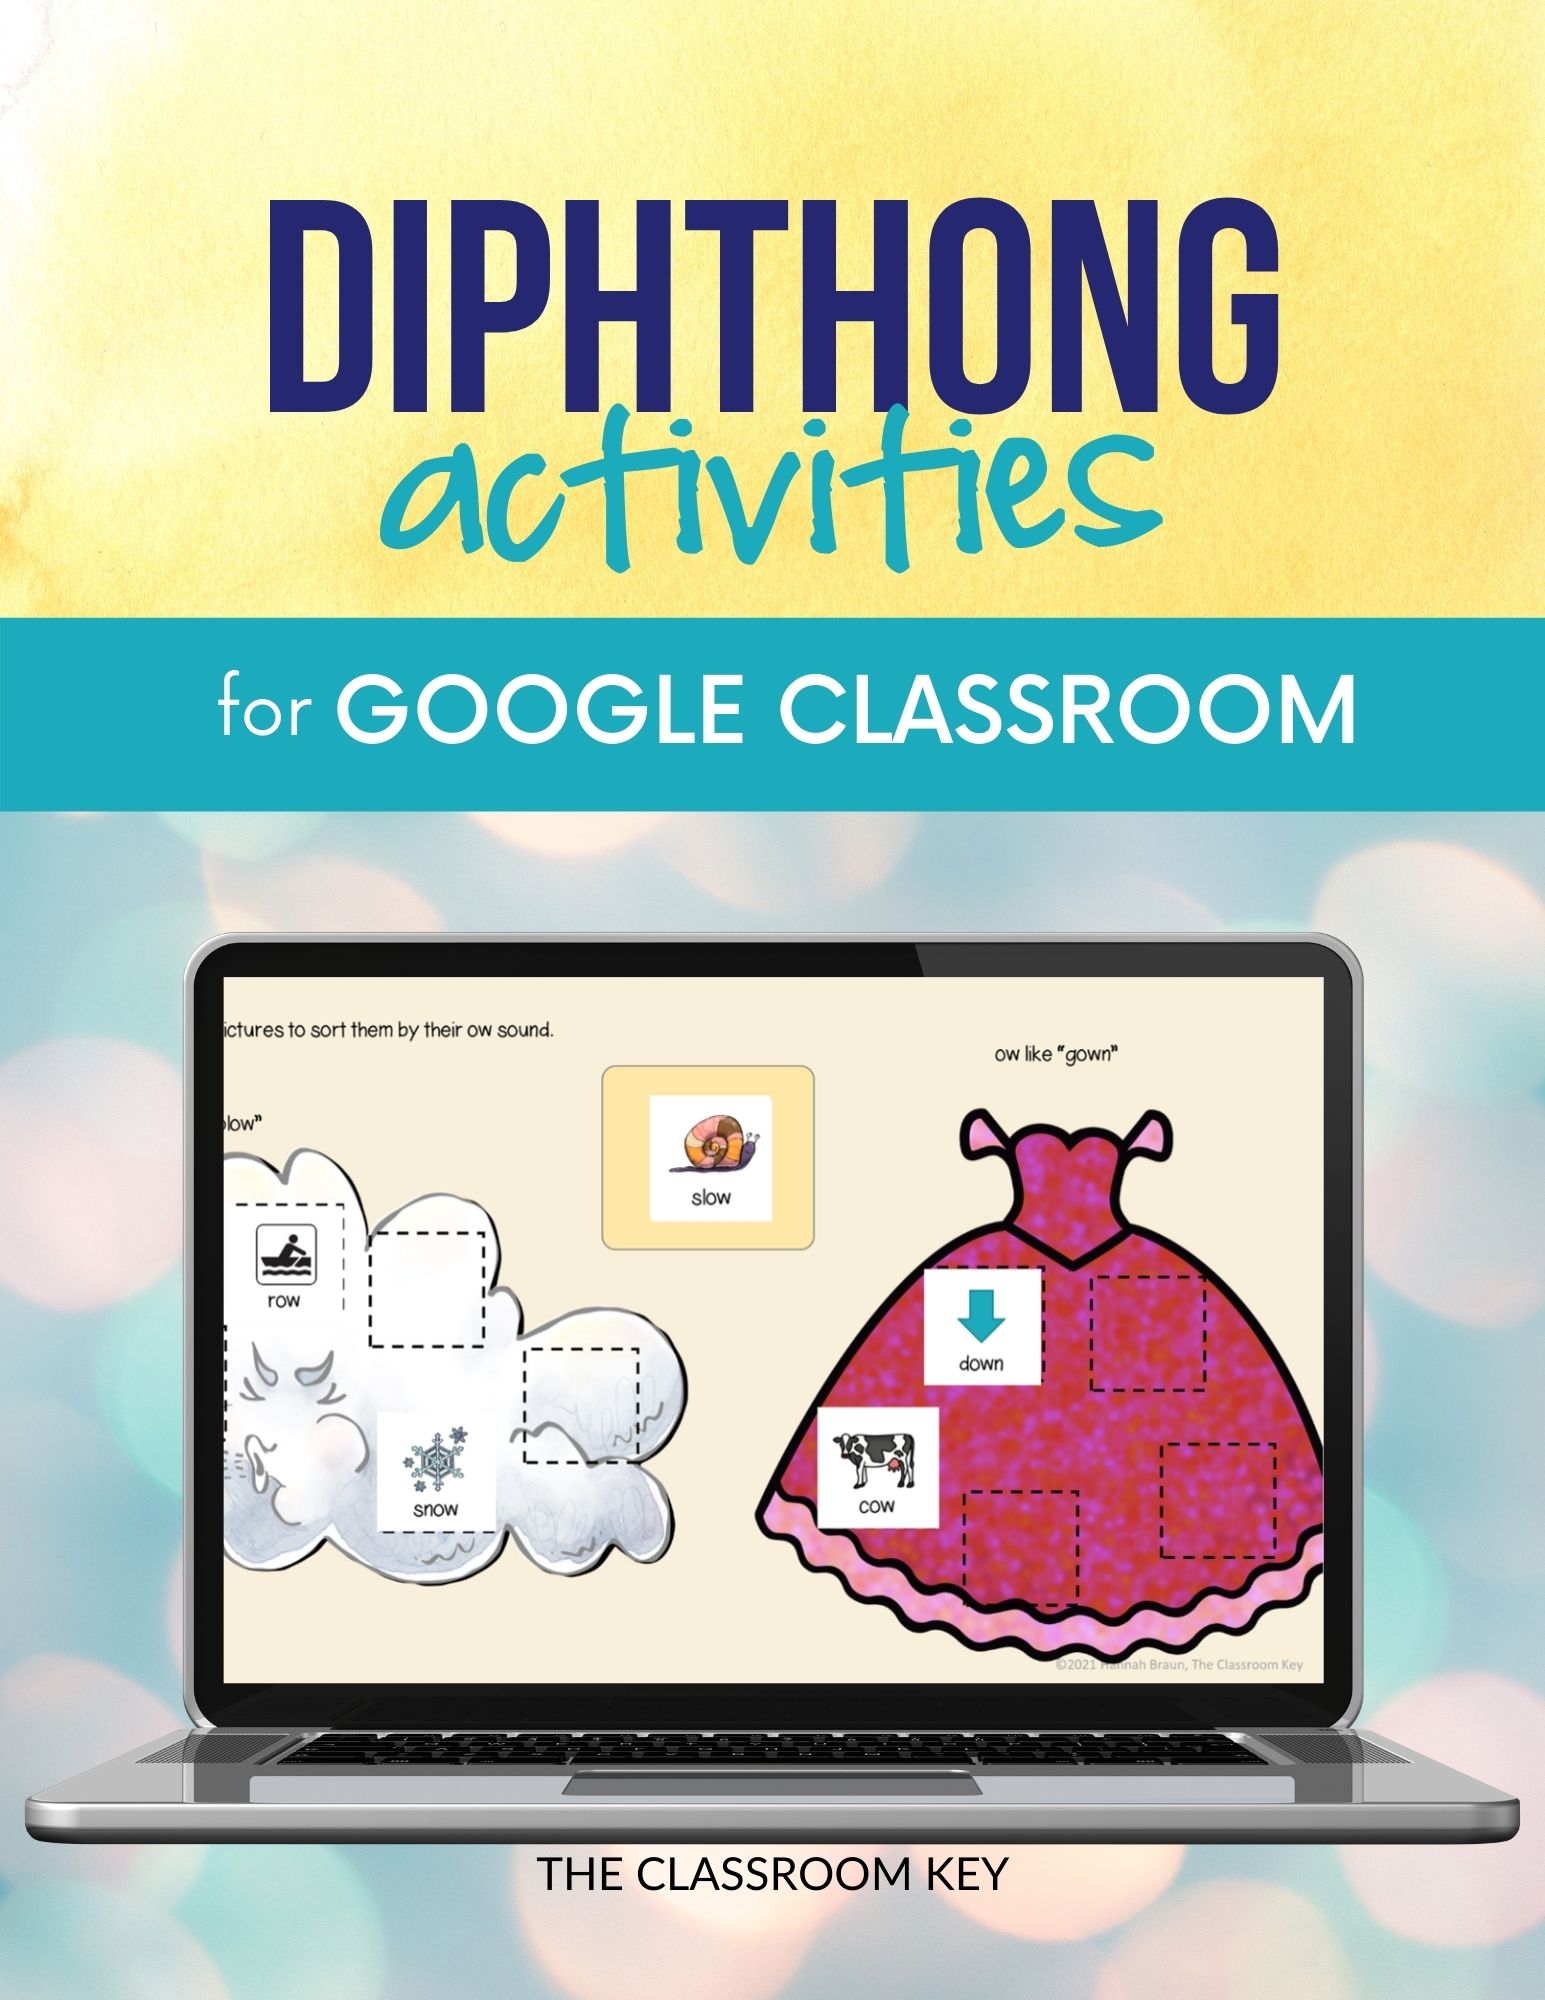 diphthong activities for Google classroom